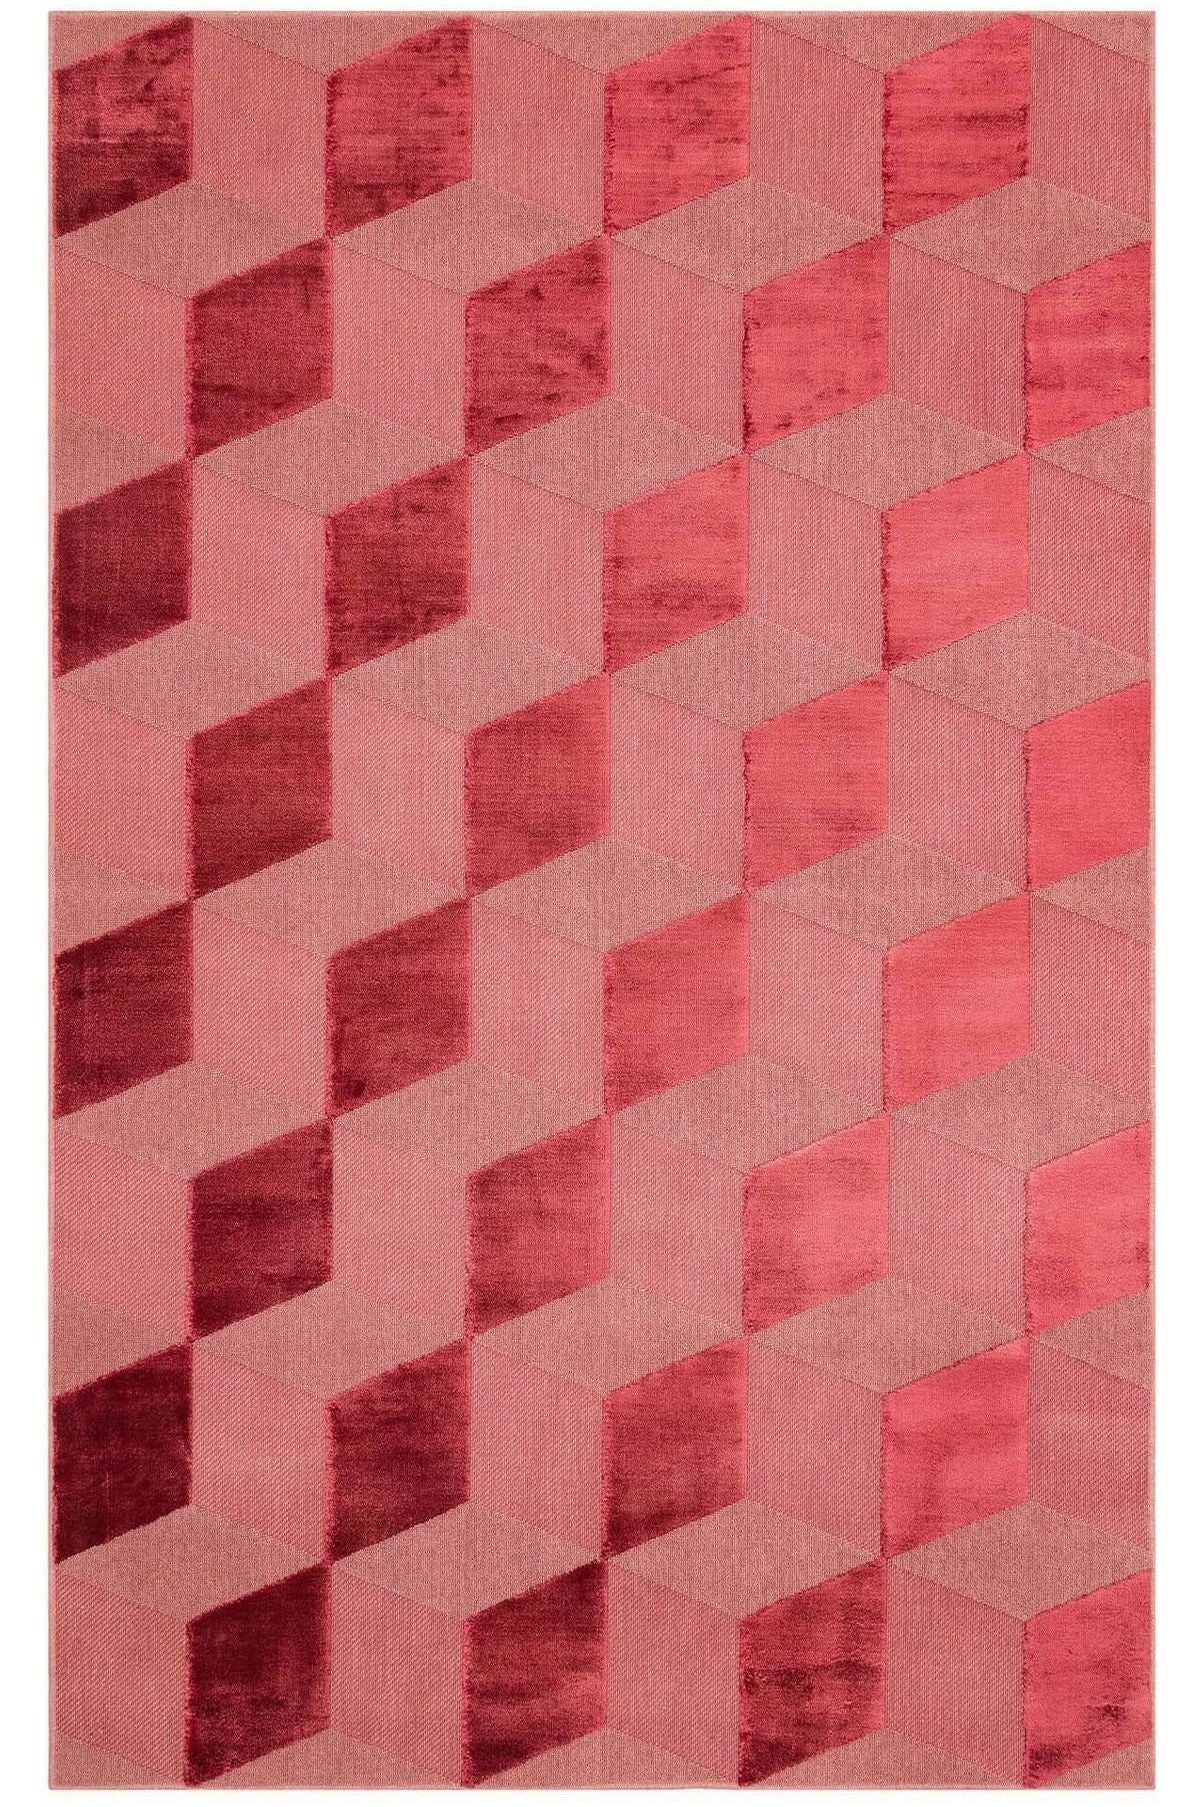 #Turkish_Carpets_Rugs# #Modern_Carpets# #Abrash_Carpets#Znt 05 Burgundy Dyed